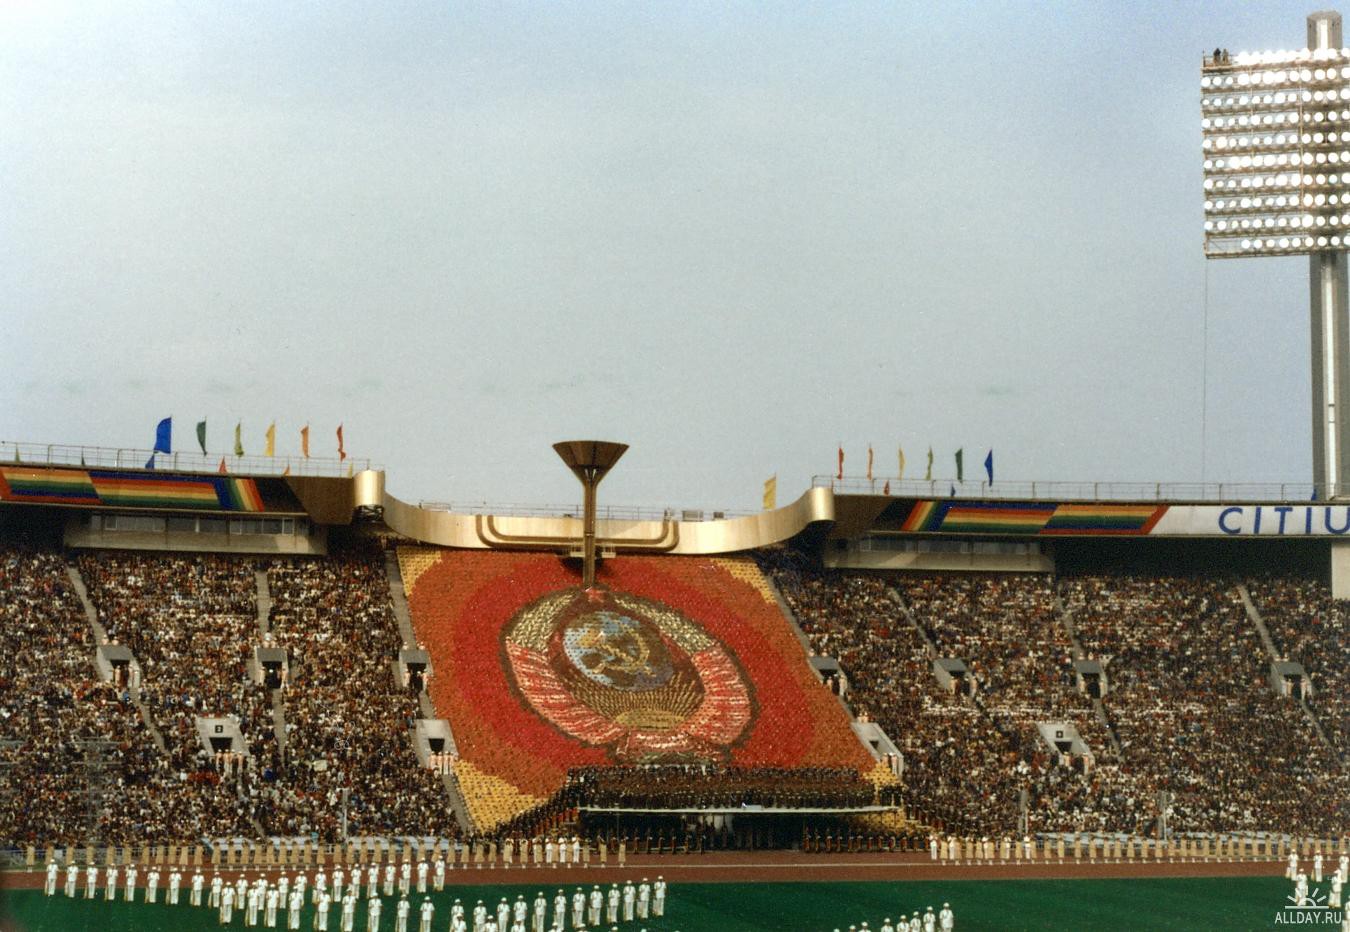 Year stadia. Олимпийские игры в СССР 1980. Олимпийские игры в Москве 1980.